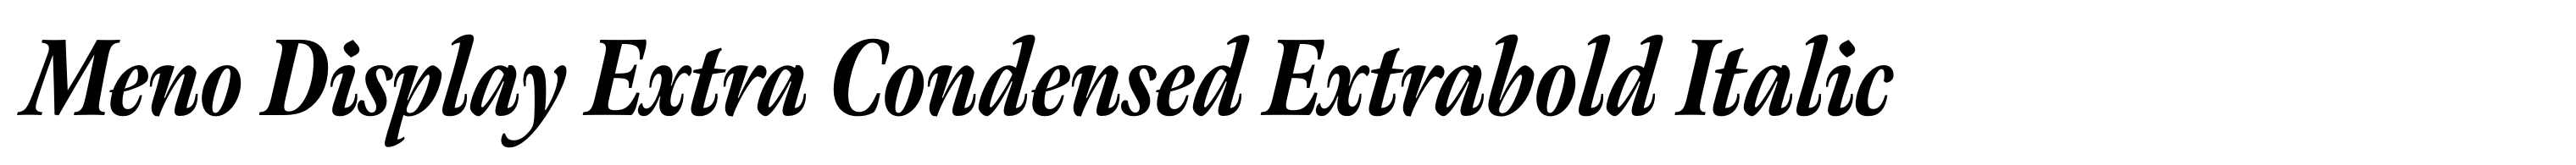 Meno Display Extra Condensed Extrabold Italic